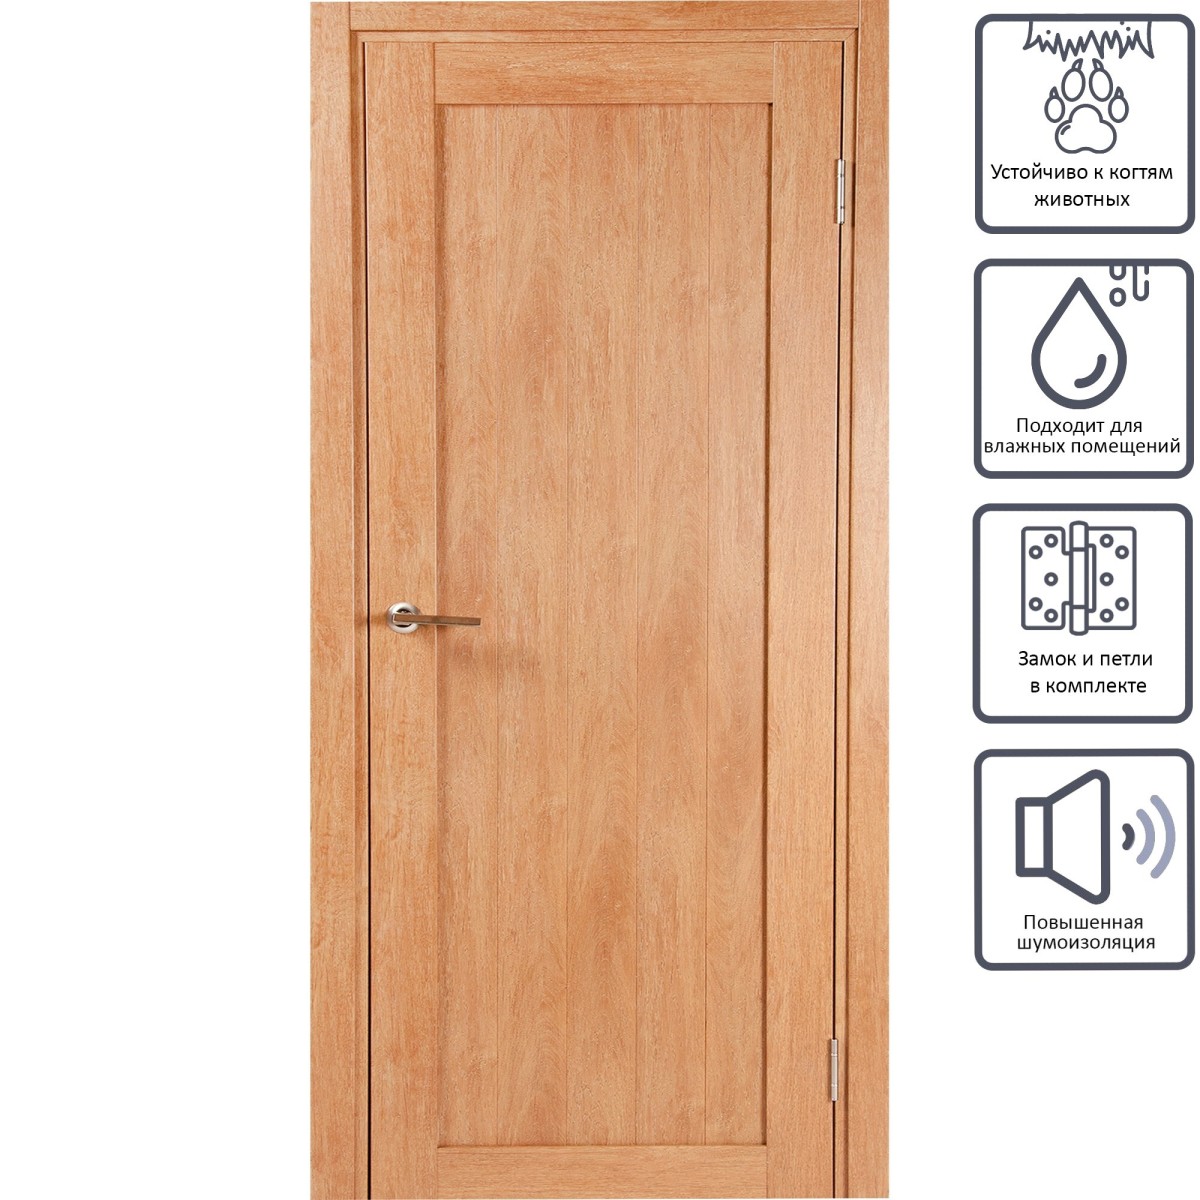 Дверь межкомнатная глухая Кантри 80x200 см, ПВХ, цвет дуб арагон, с фурнитурой